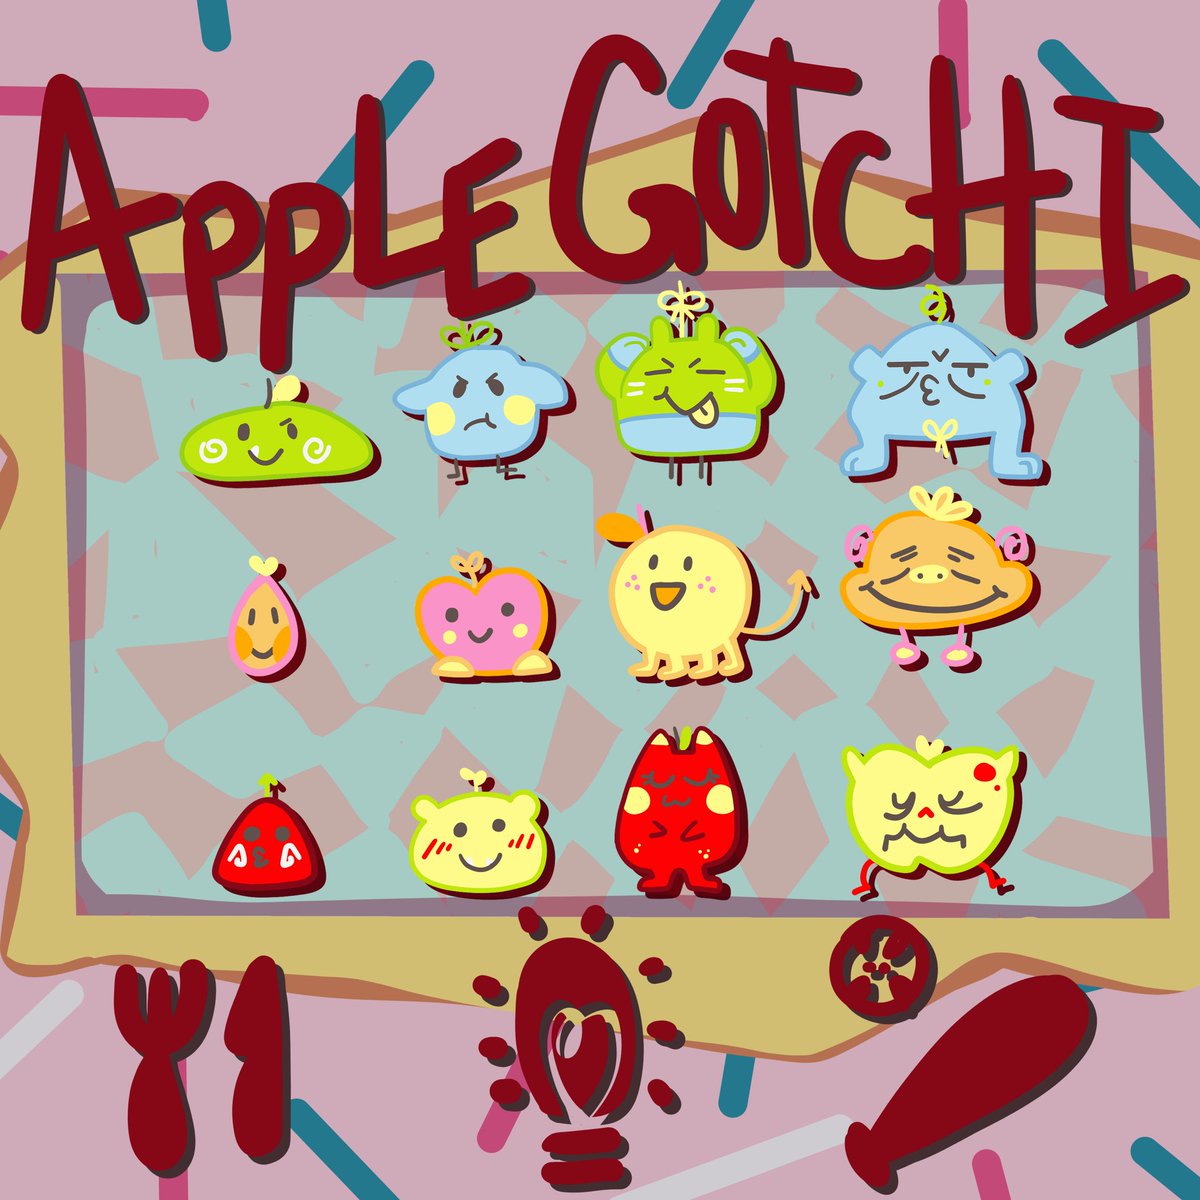 Applegotchi! Which apple would you hope to get? 🟢🟡🔴
#twitch #tamagotchi #originalcharacter #fanart #fakegotchi #retrogames #childhoodgames